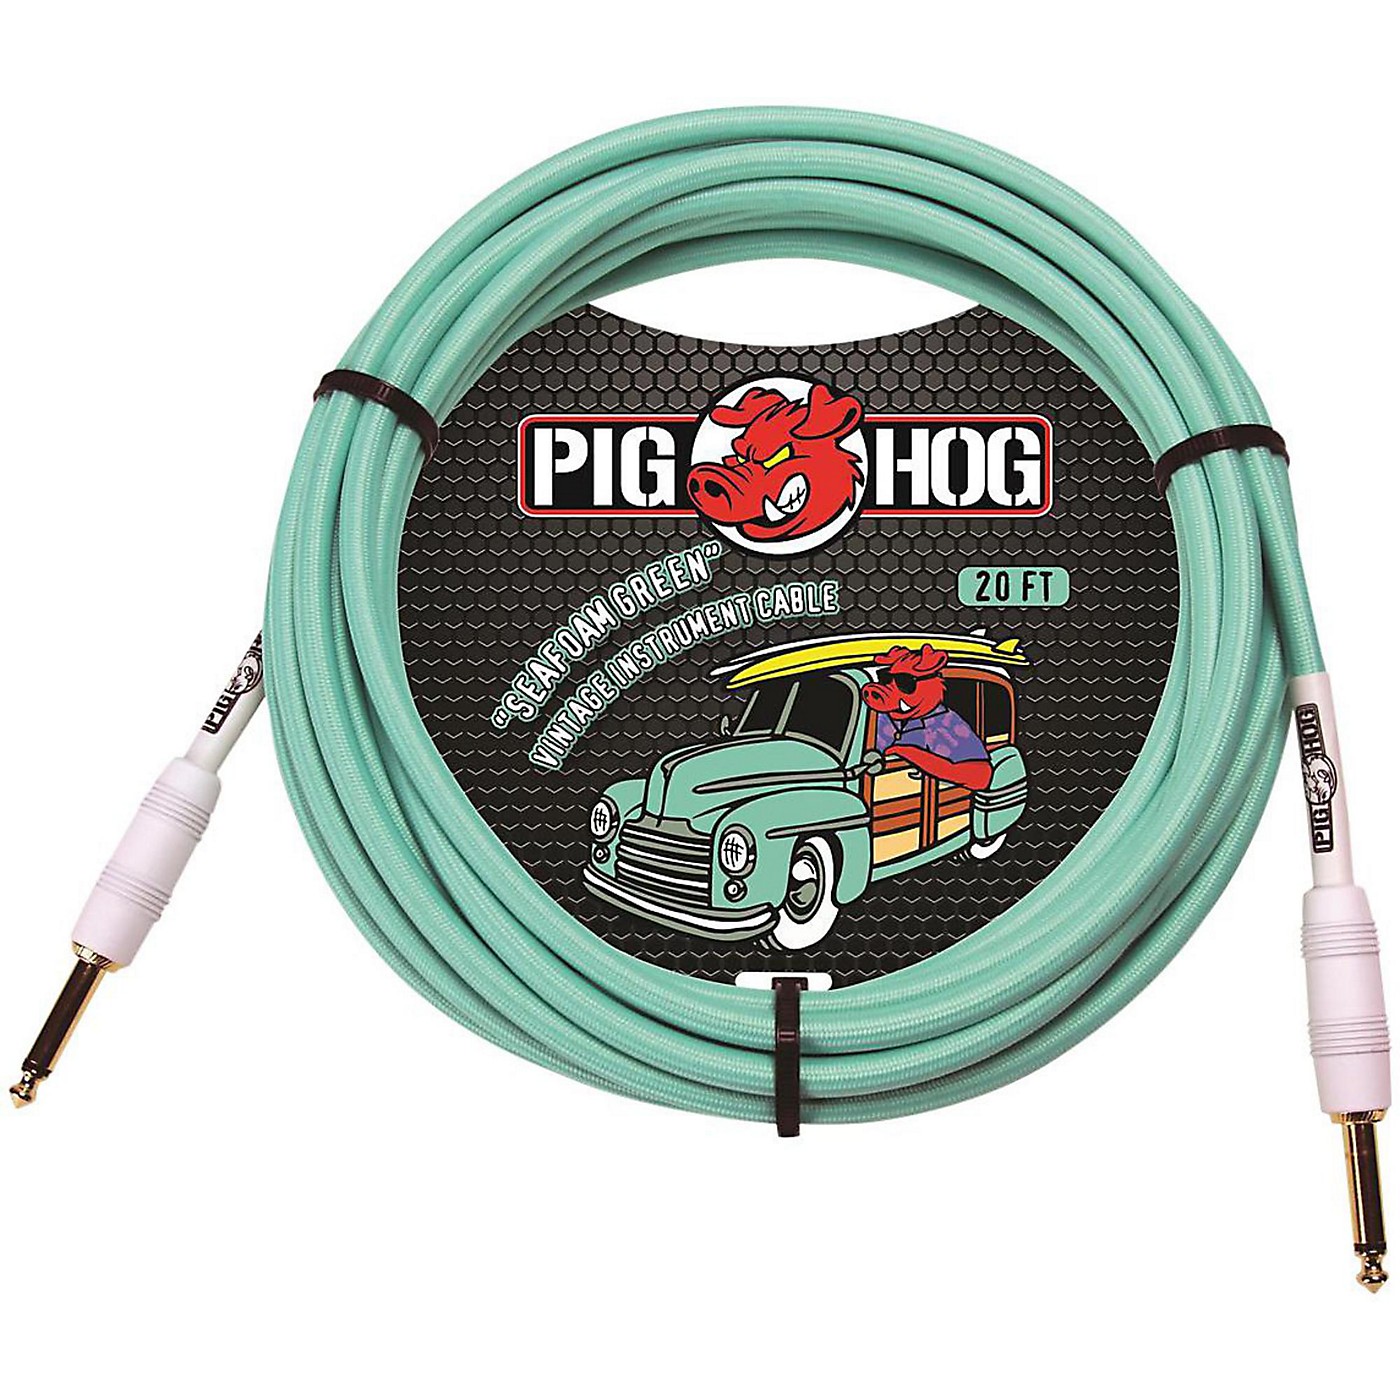 Pig Hog Instrument Cable thumbnail